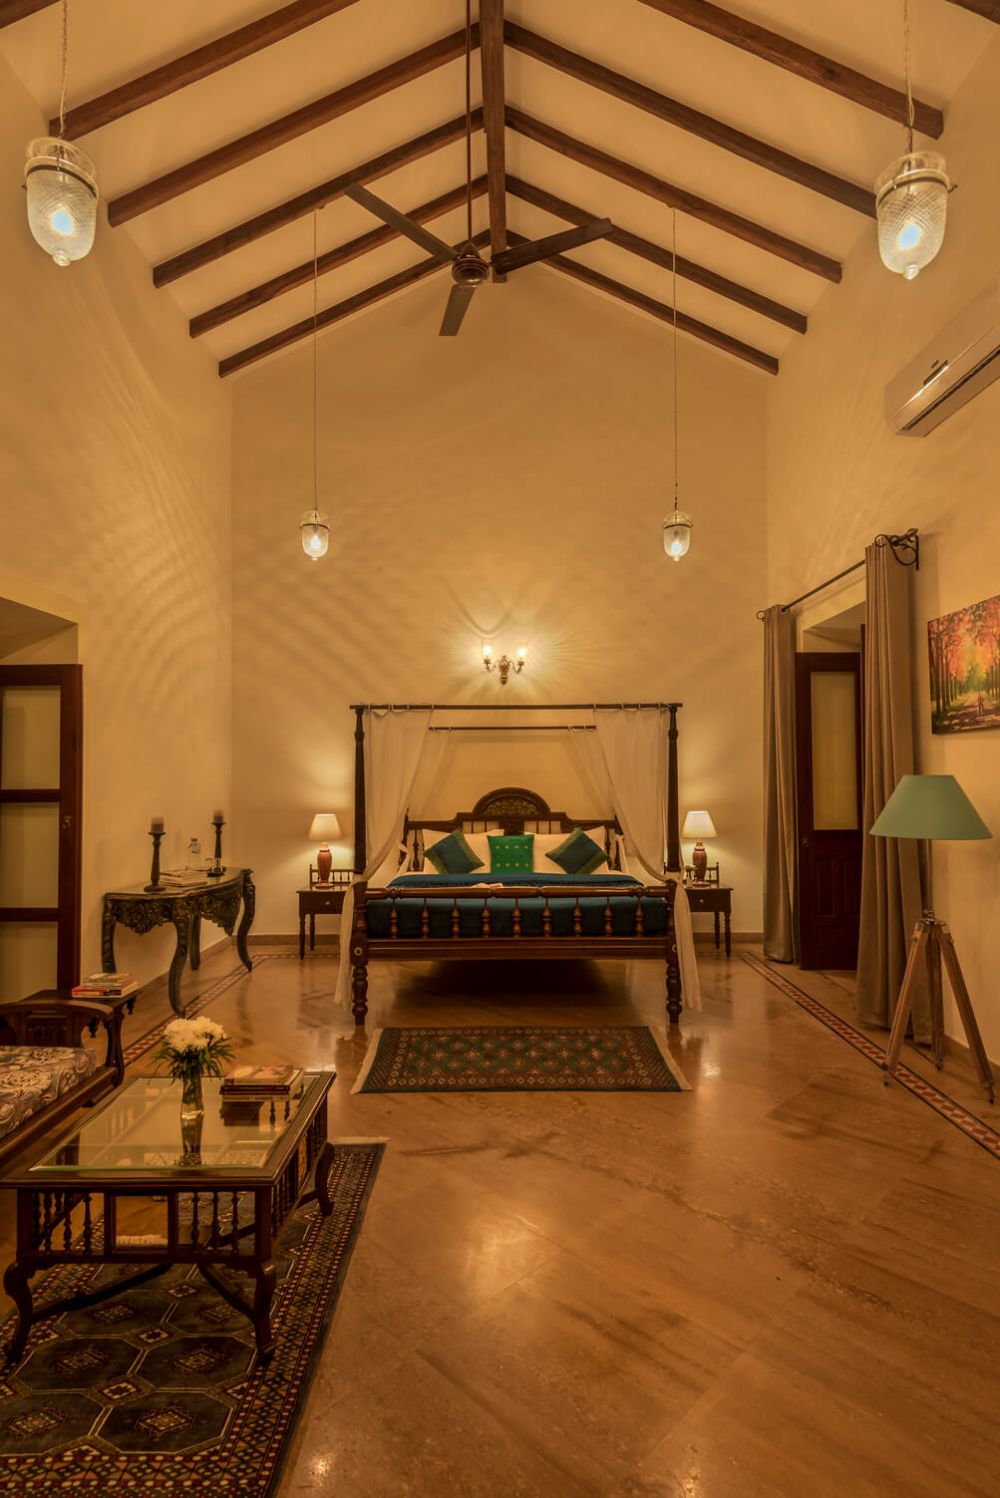 5 Bedroom Villa with Private Pool, Villa Casa Tina 